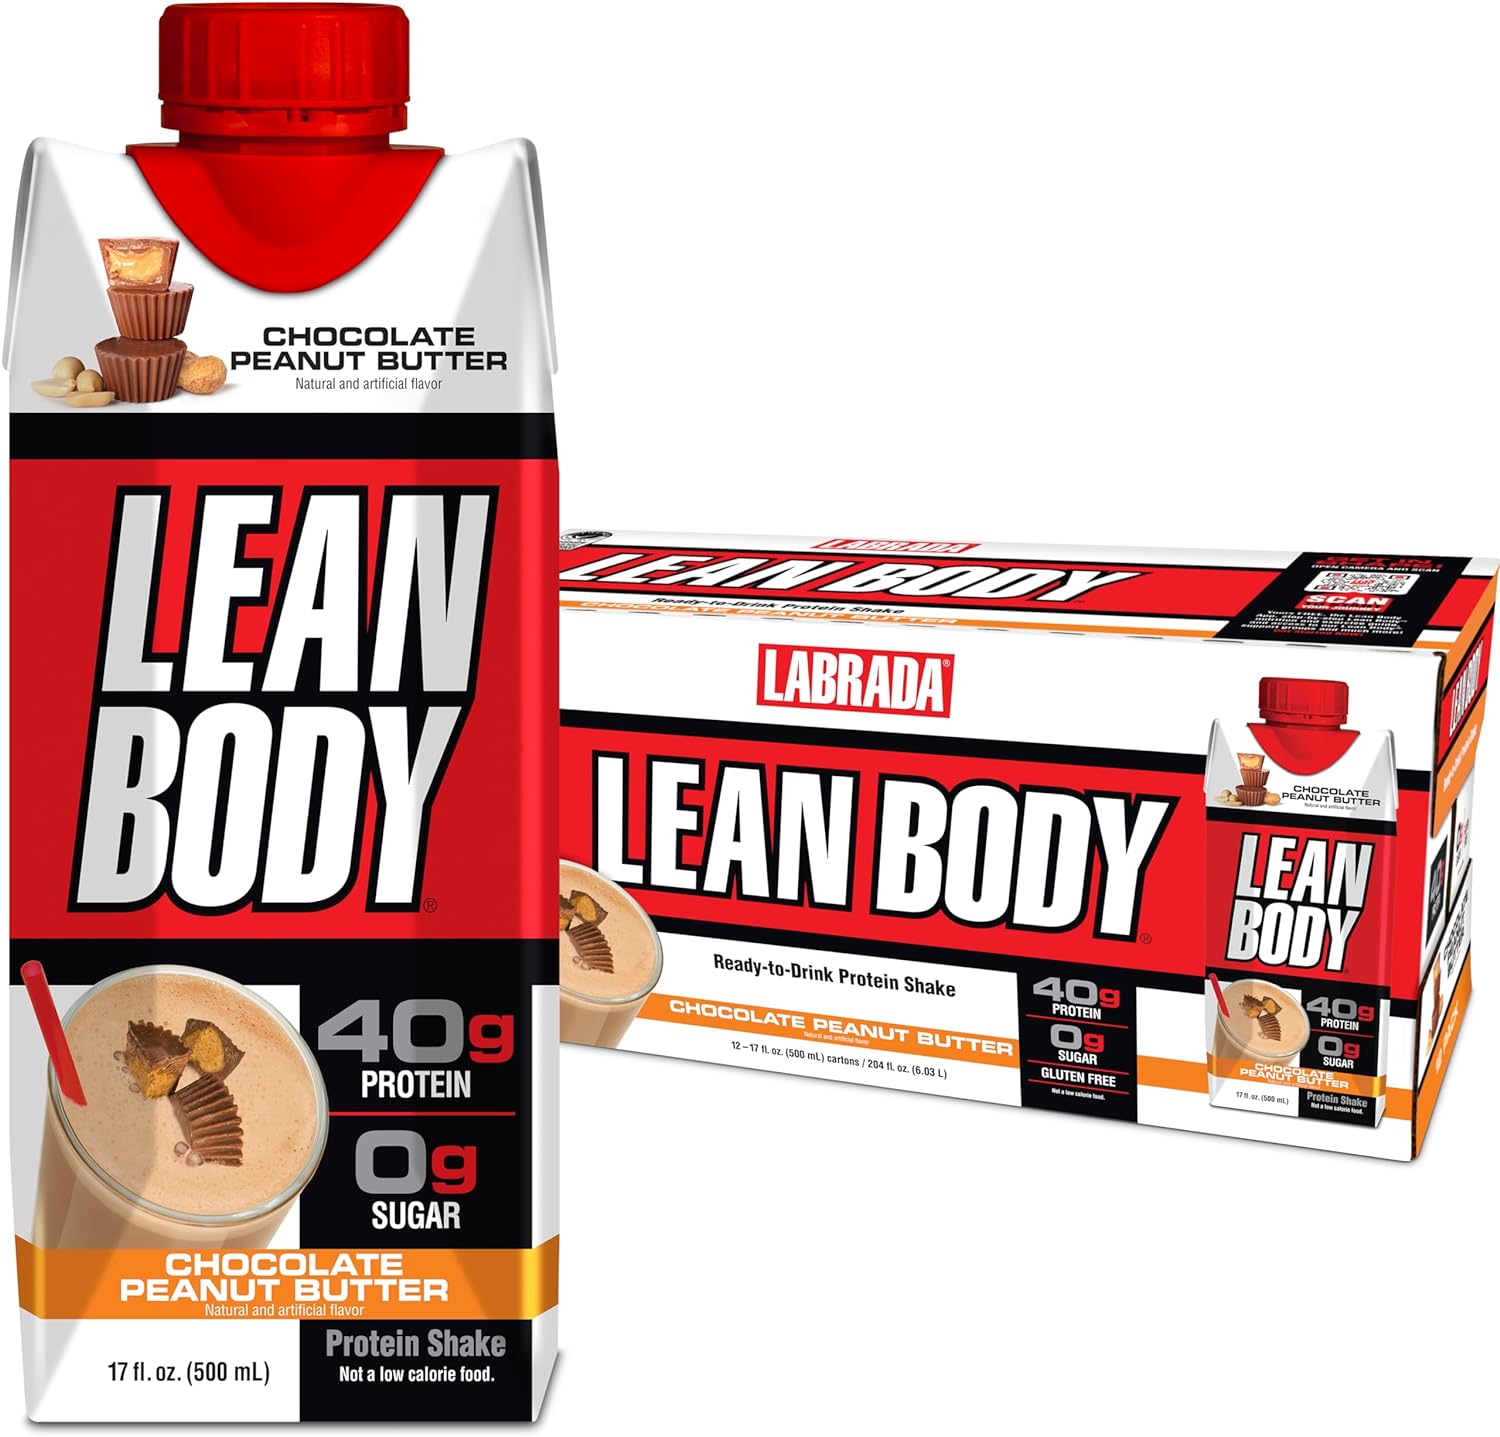 Lean Body Protein Drink 40g (12CT)